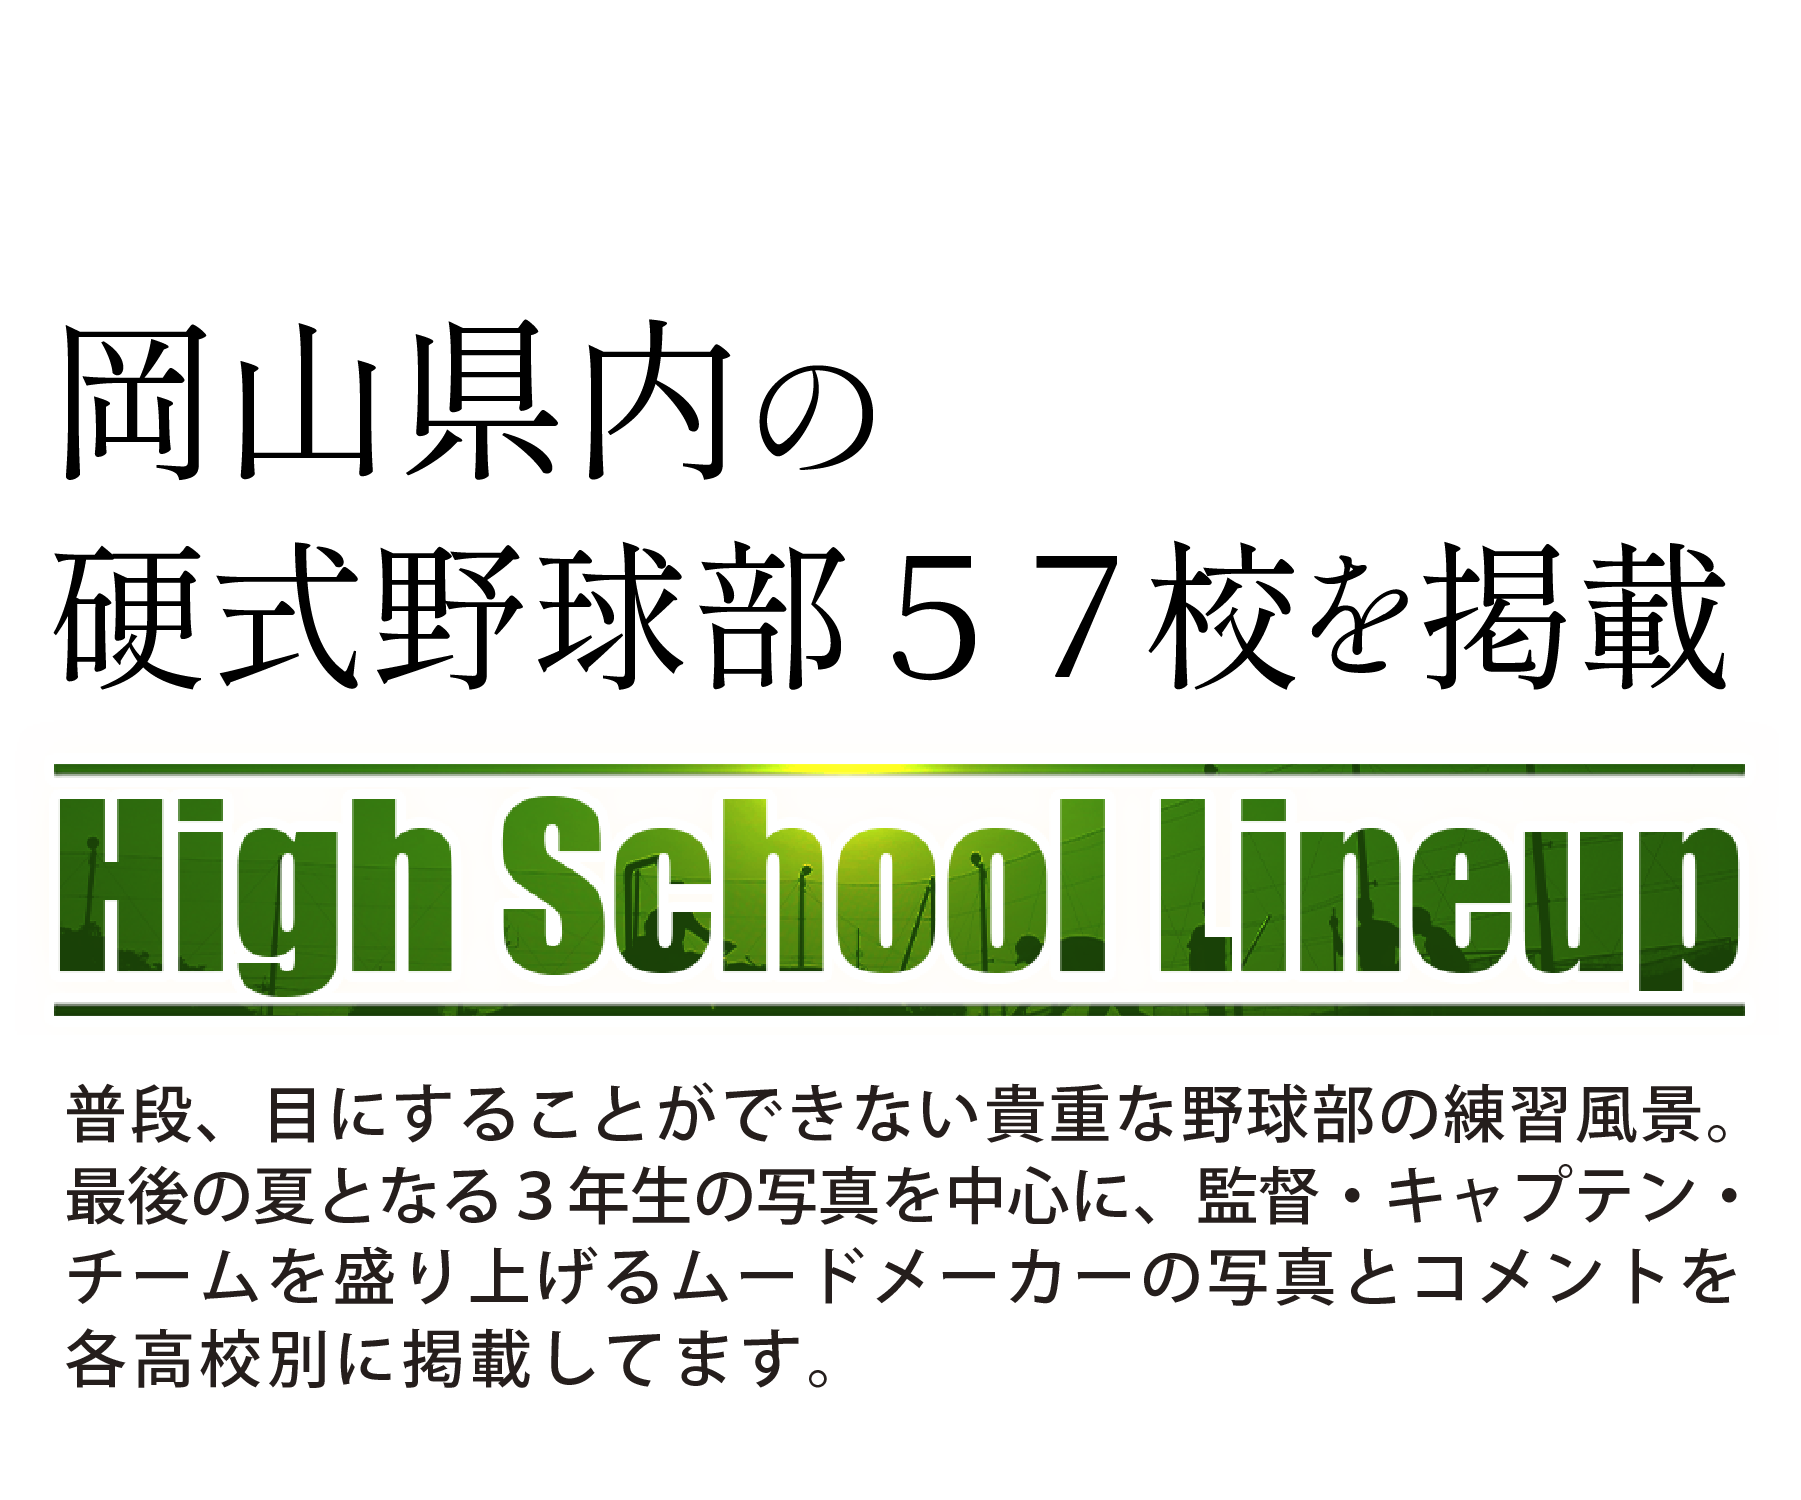 High School Lineup